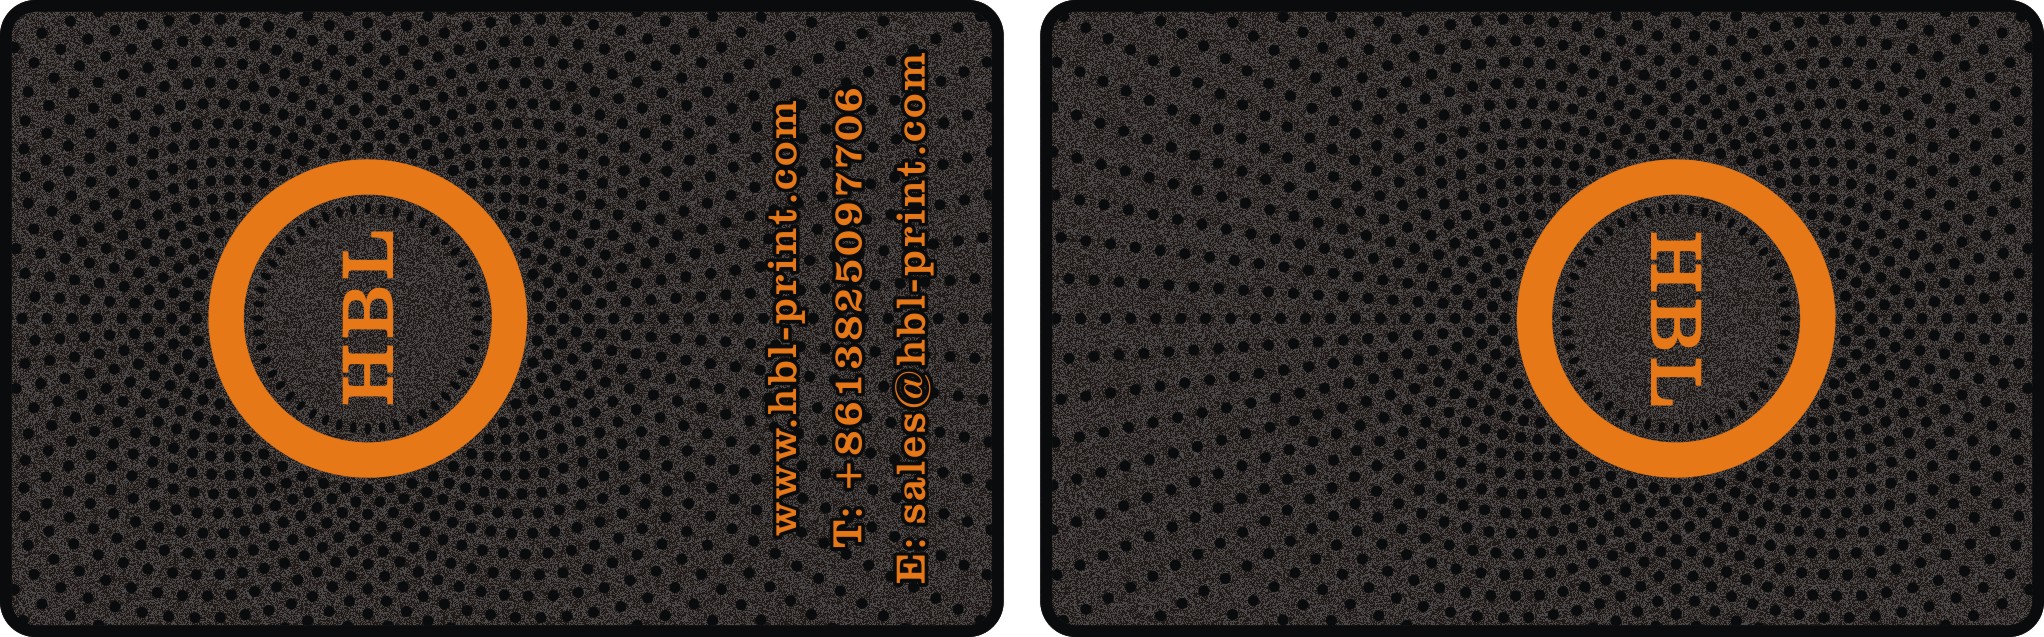 Black Matte Card Template (12)